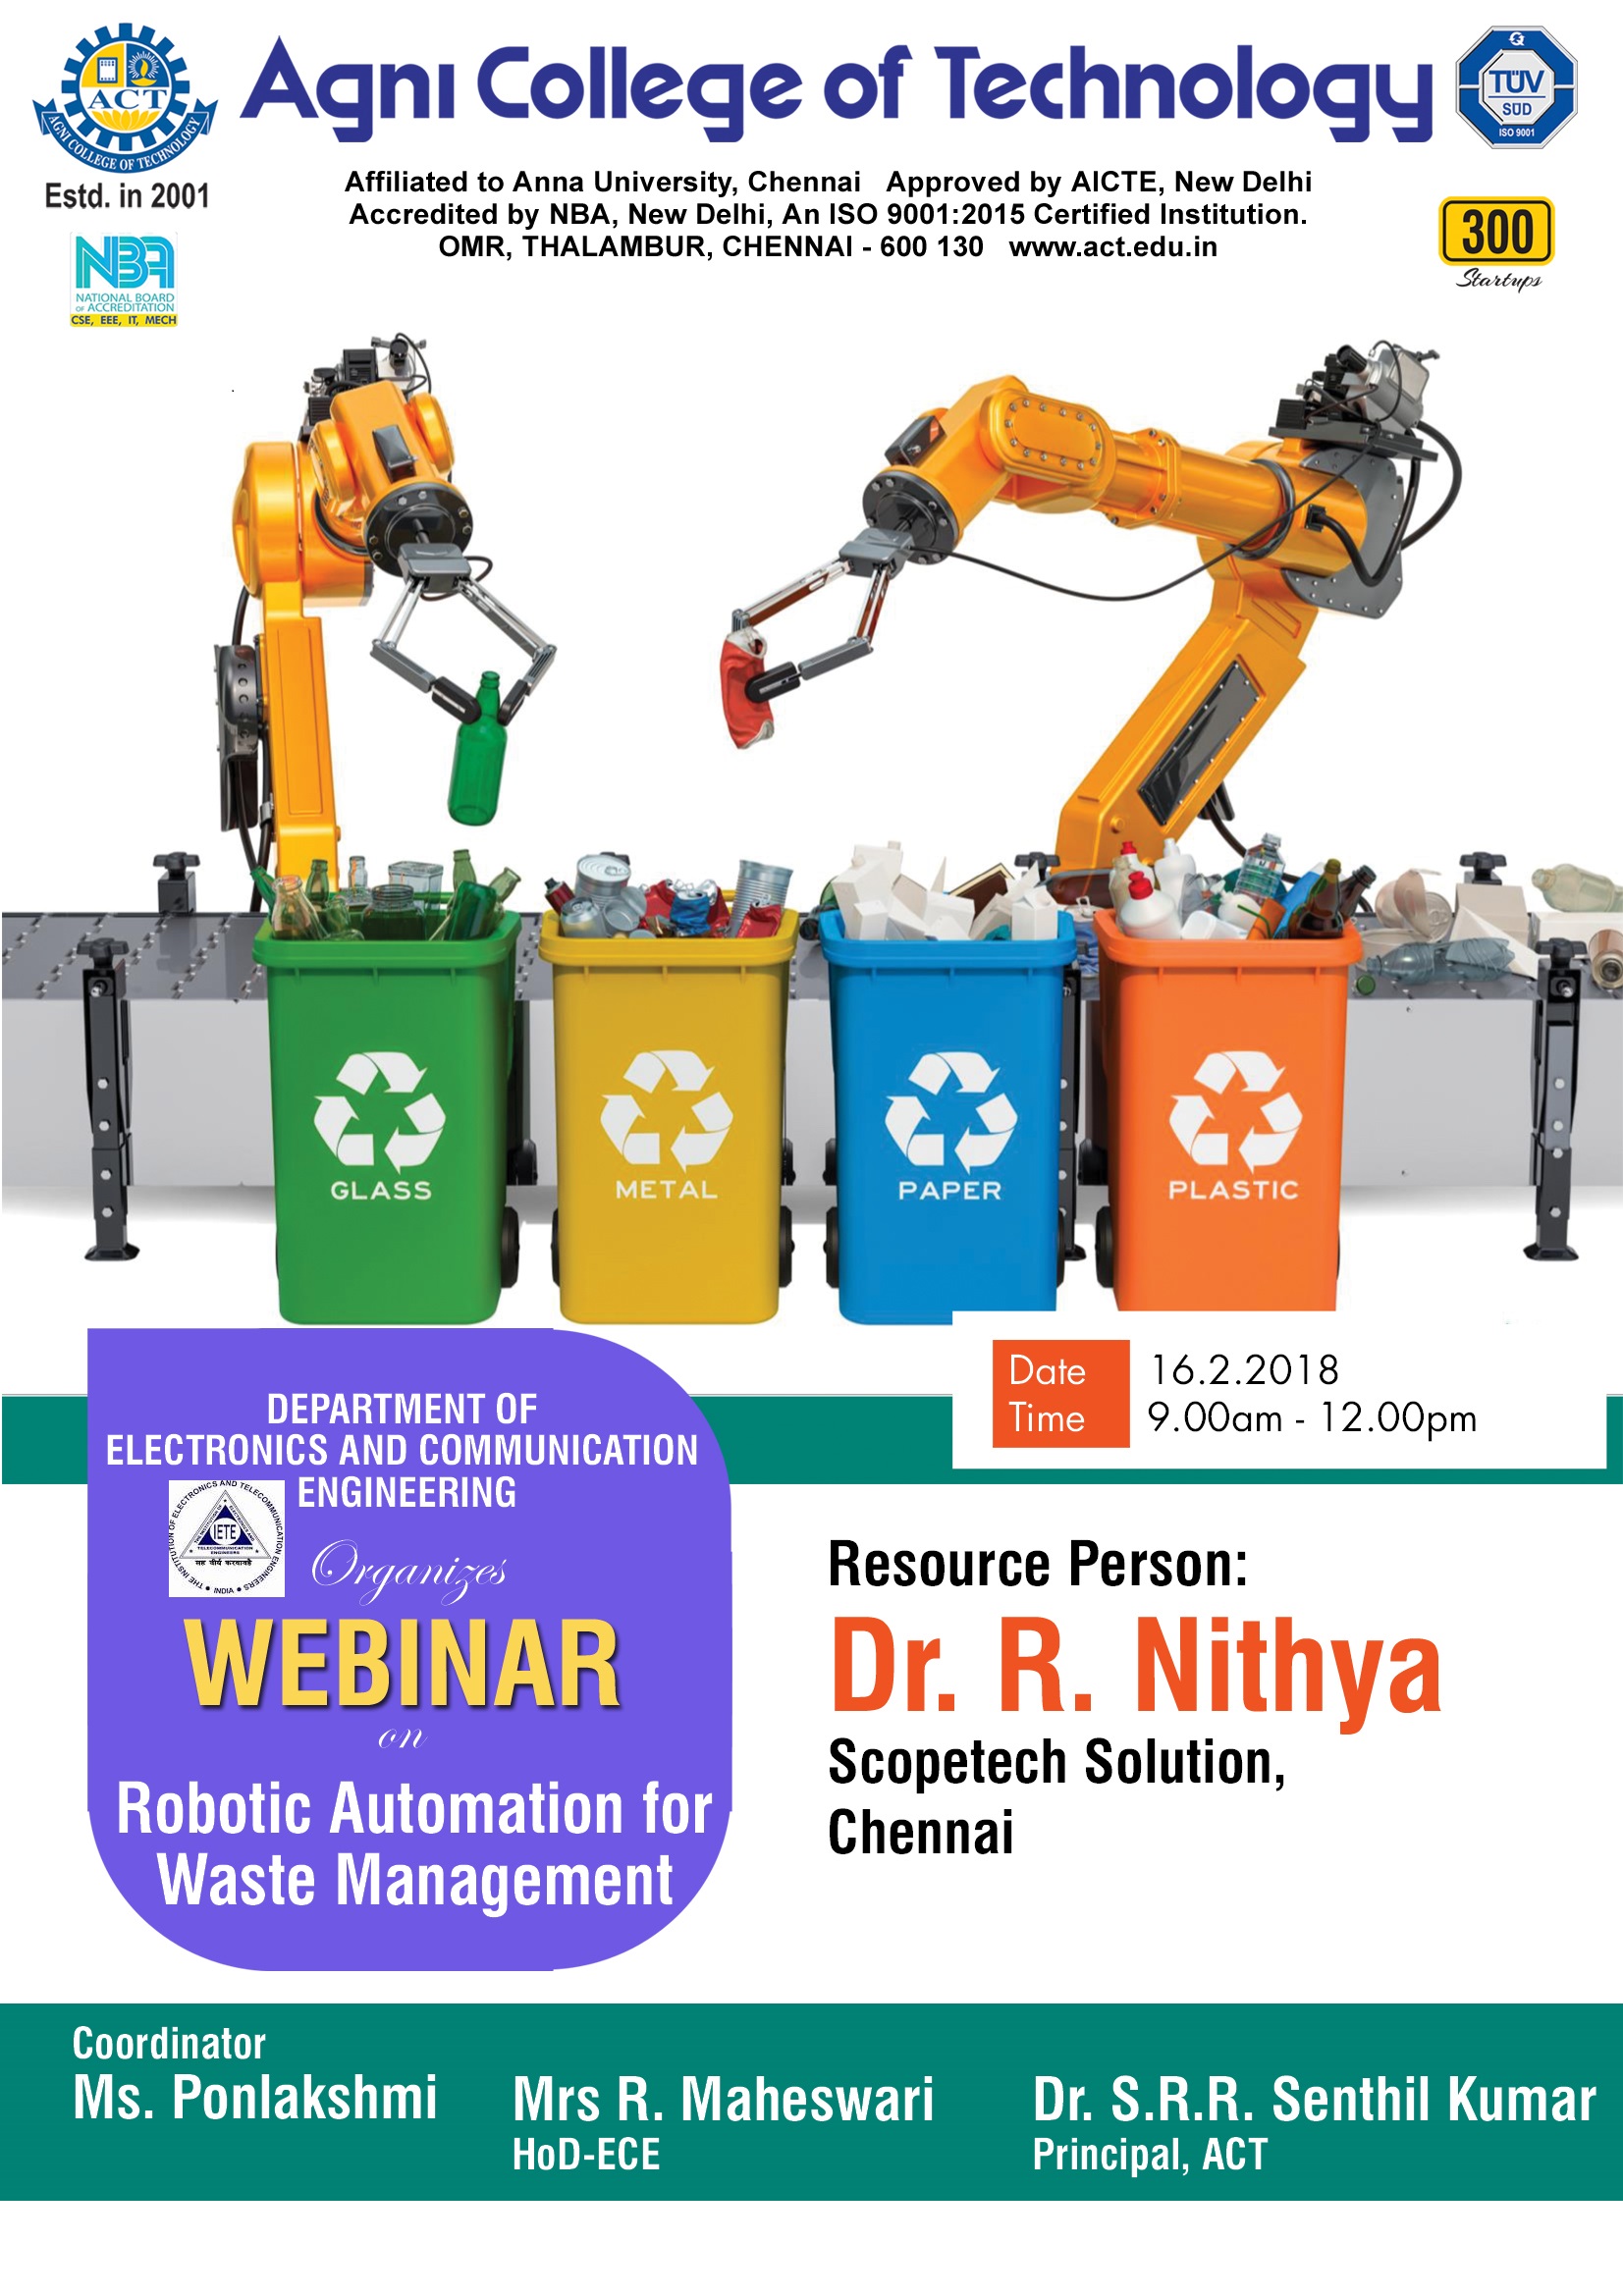 Webinar on Robotic Automation for Waste Management